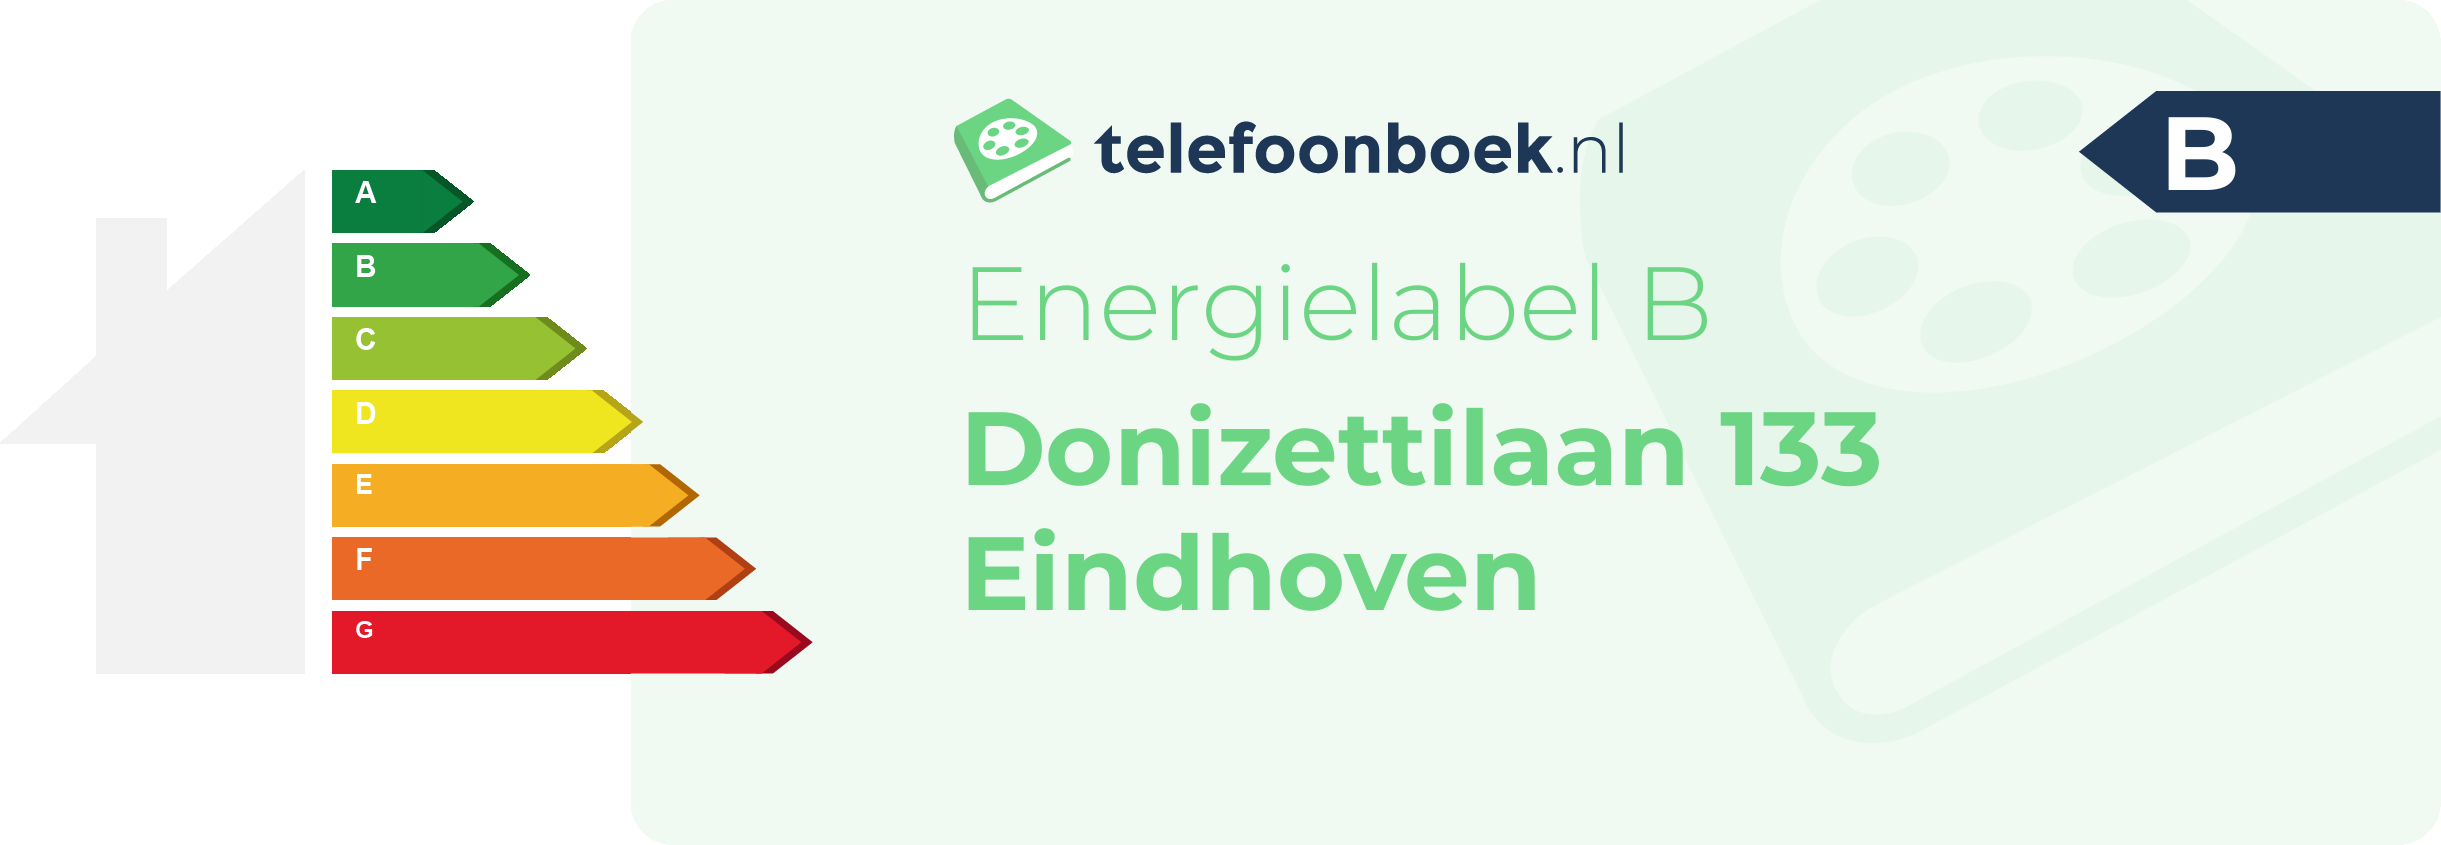 Energielabel Donizettilaan 133 Eindhoven